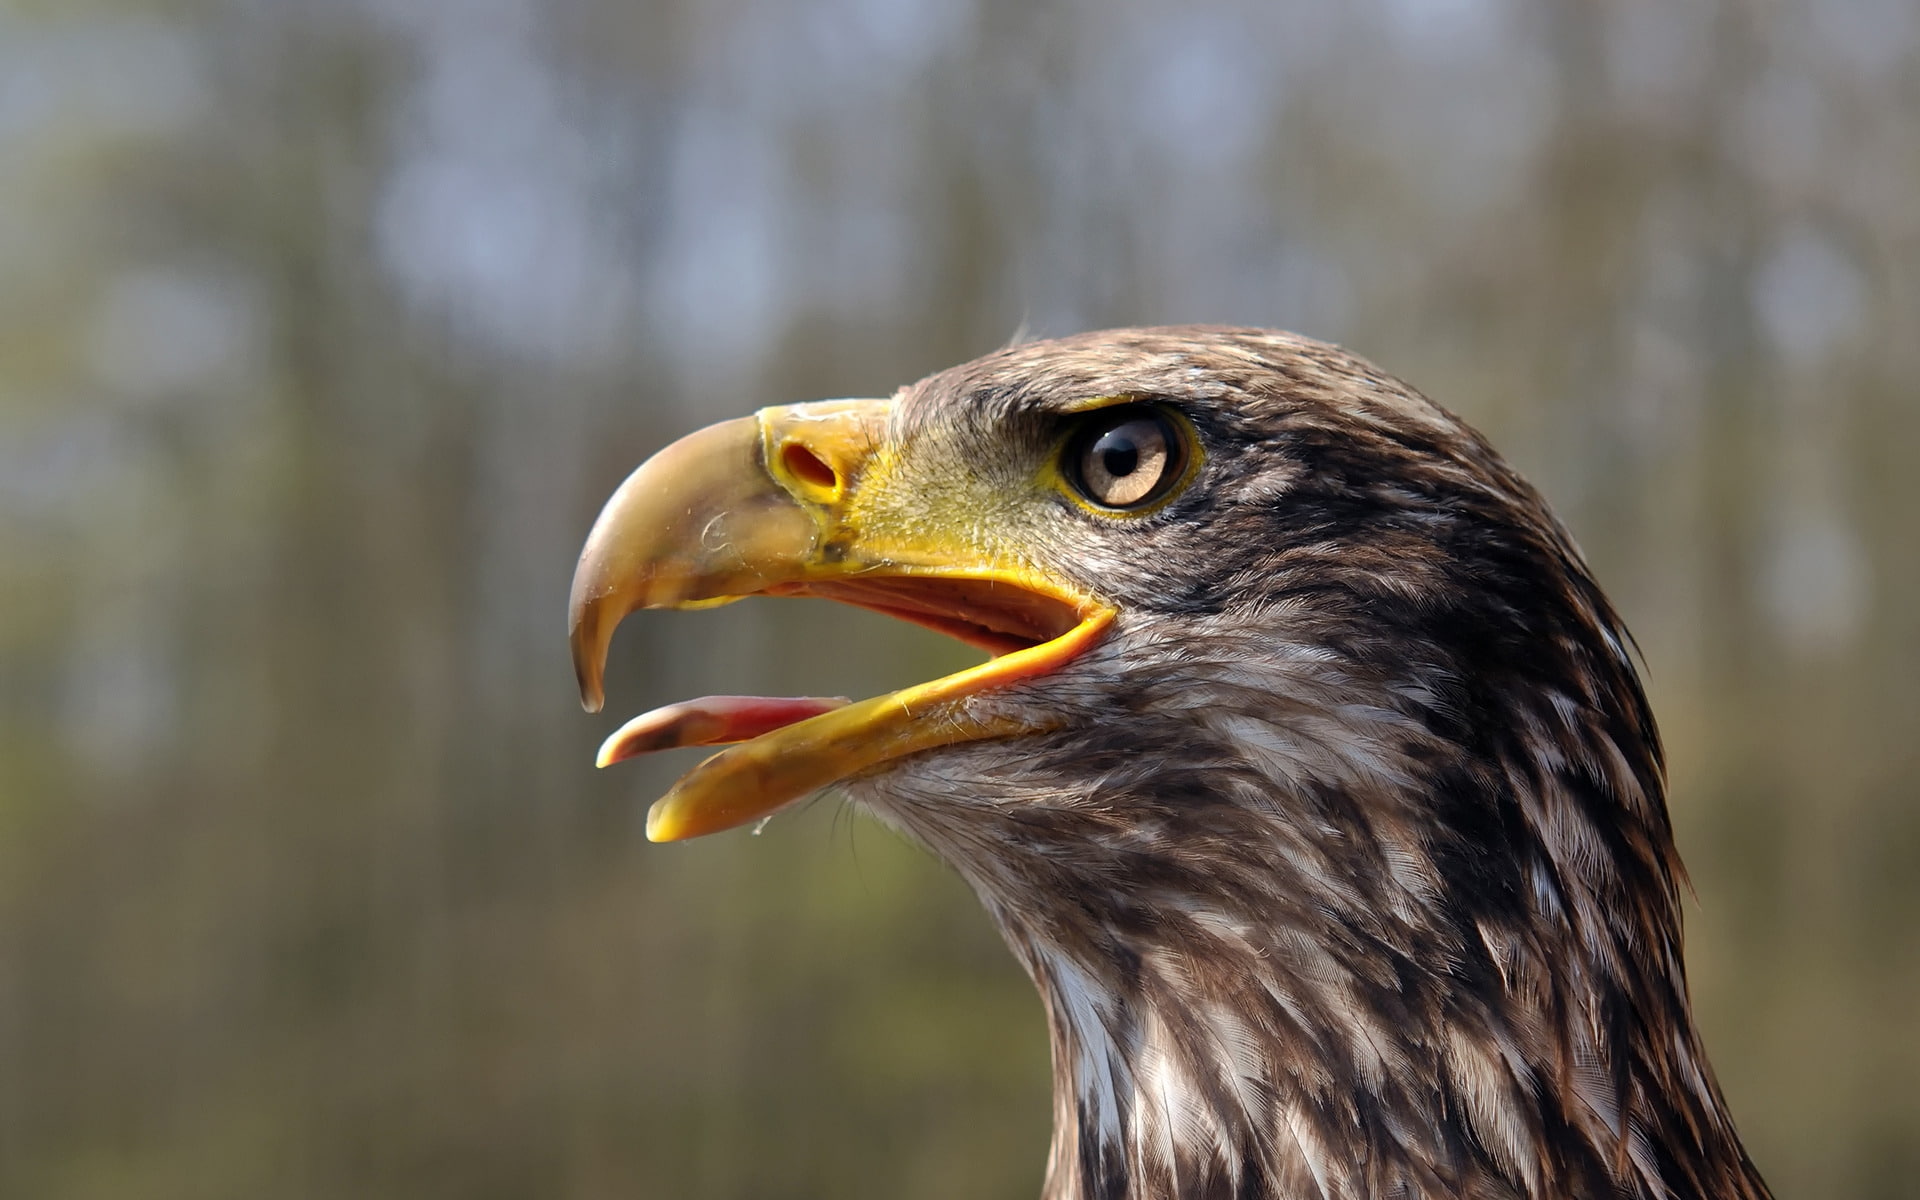 Juvenile Bald Eagle, golden eagle